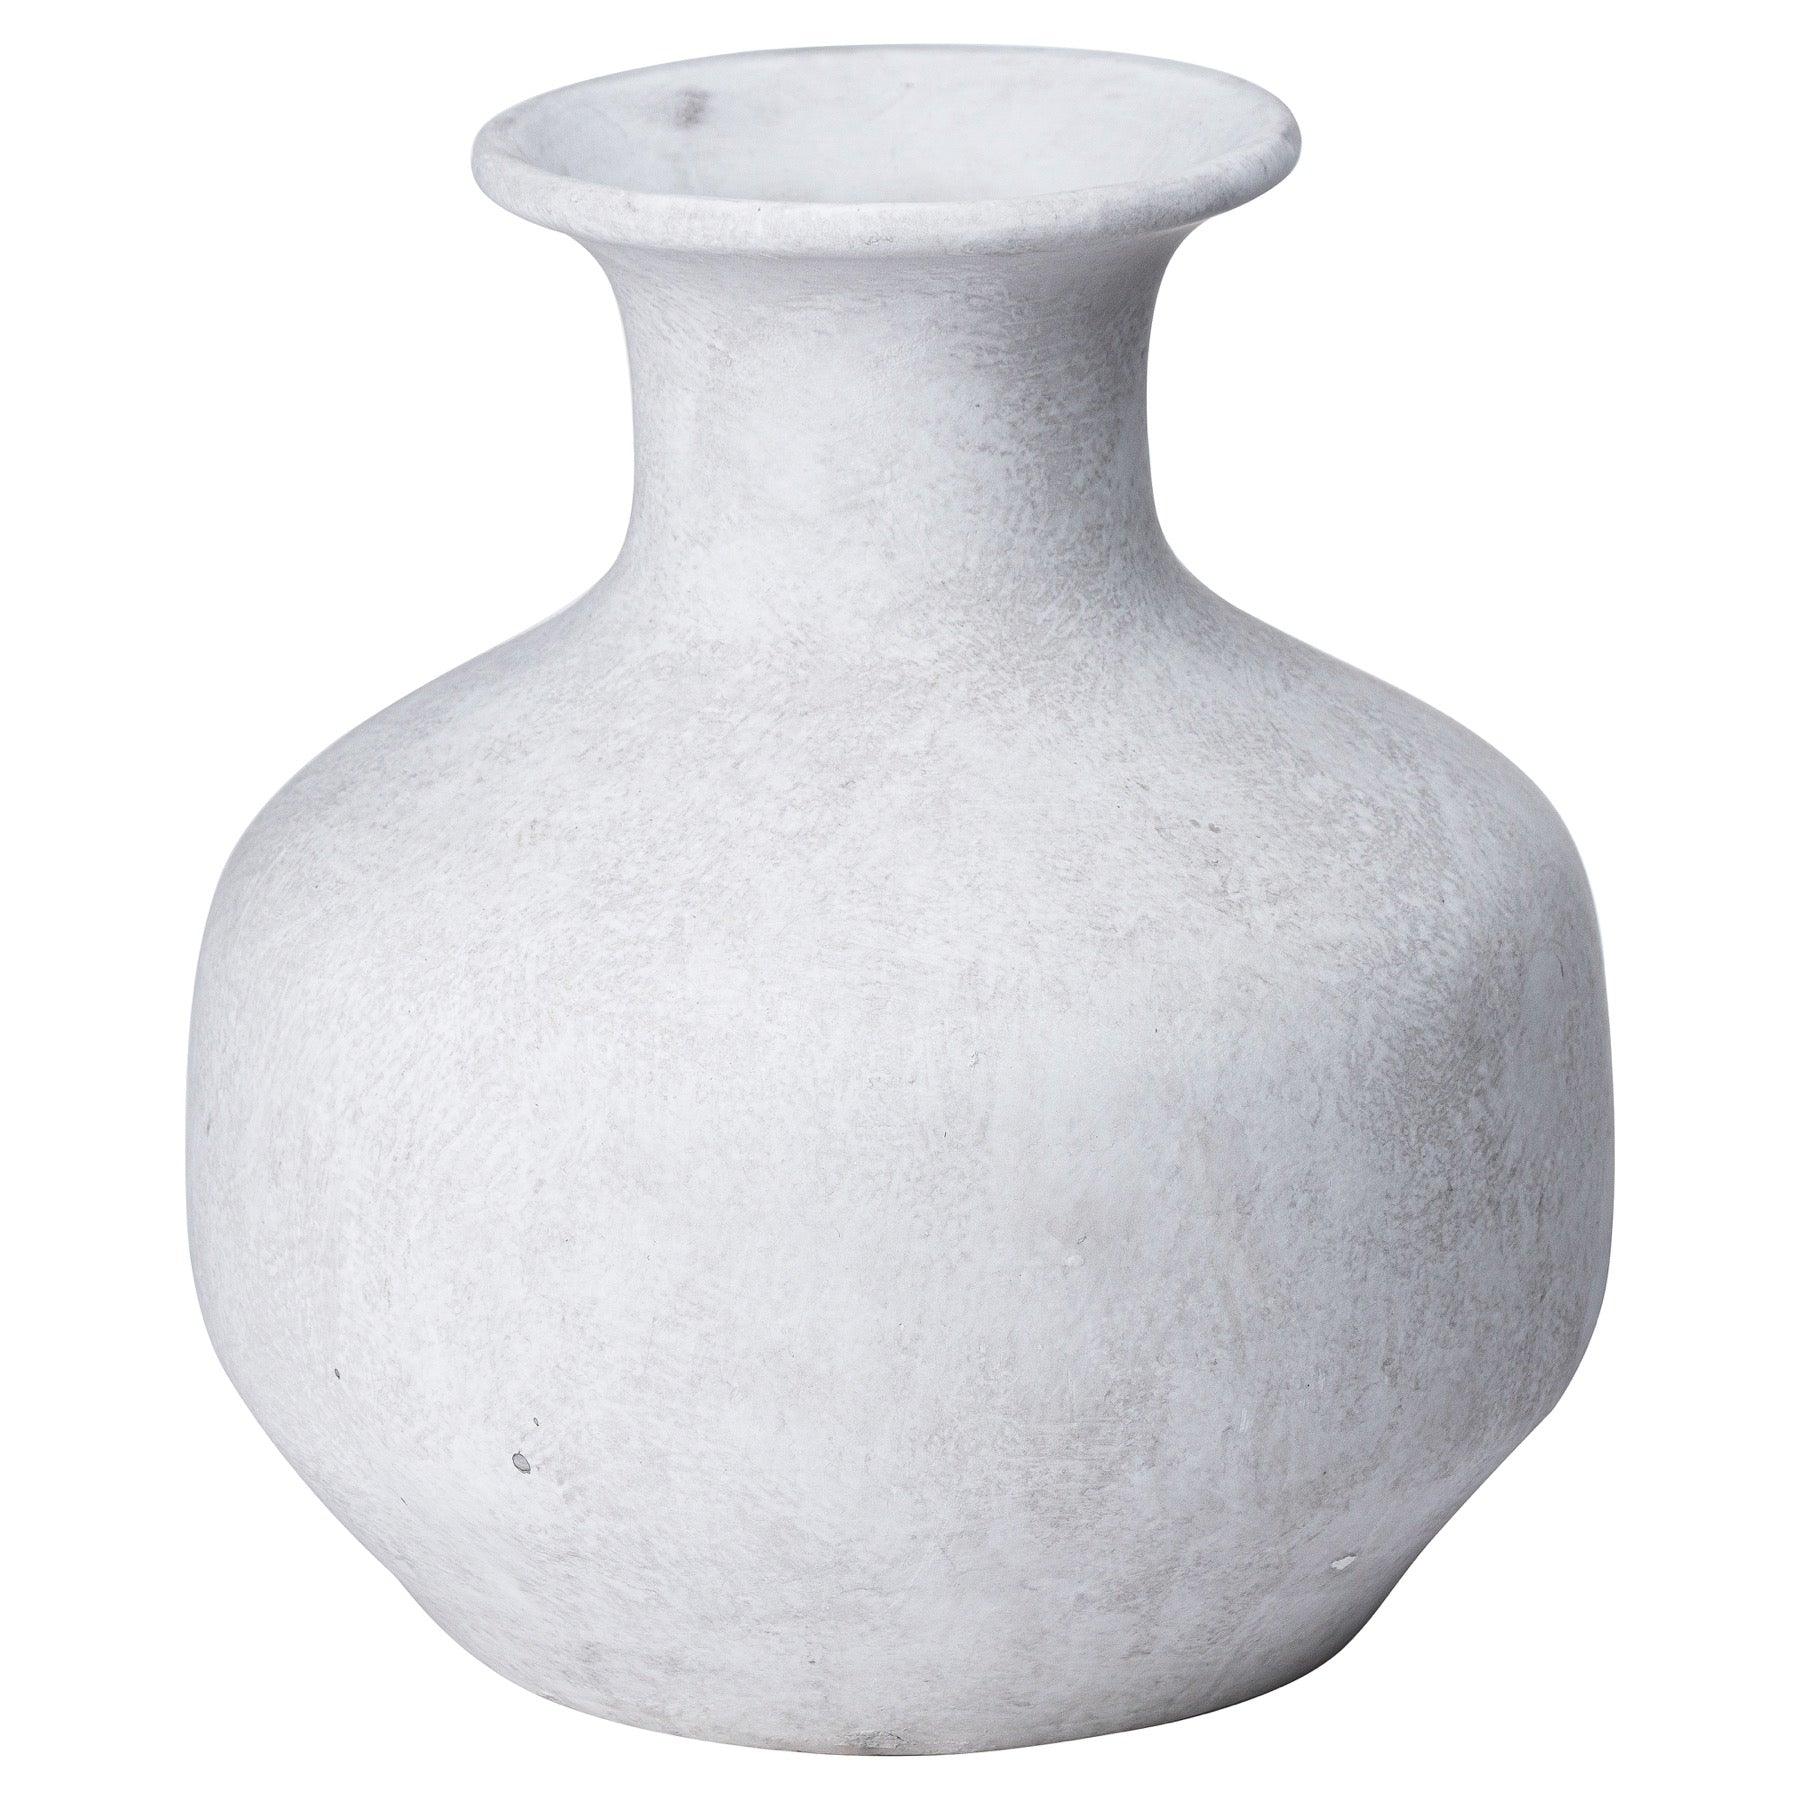 View Darcy Squat Stone Vase information